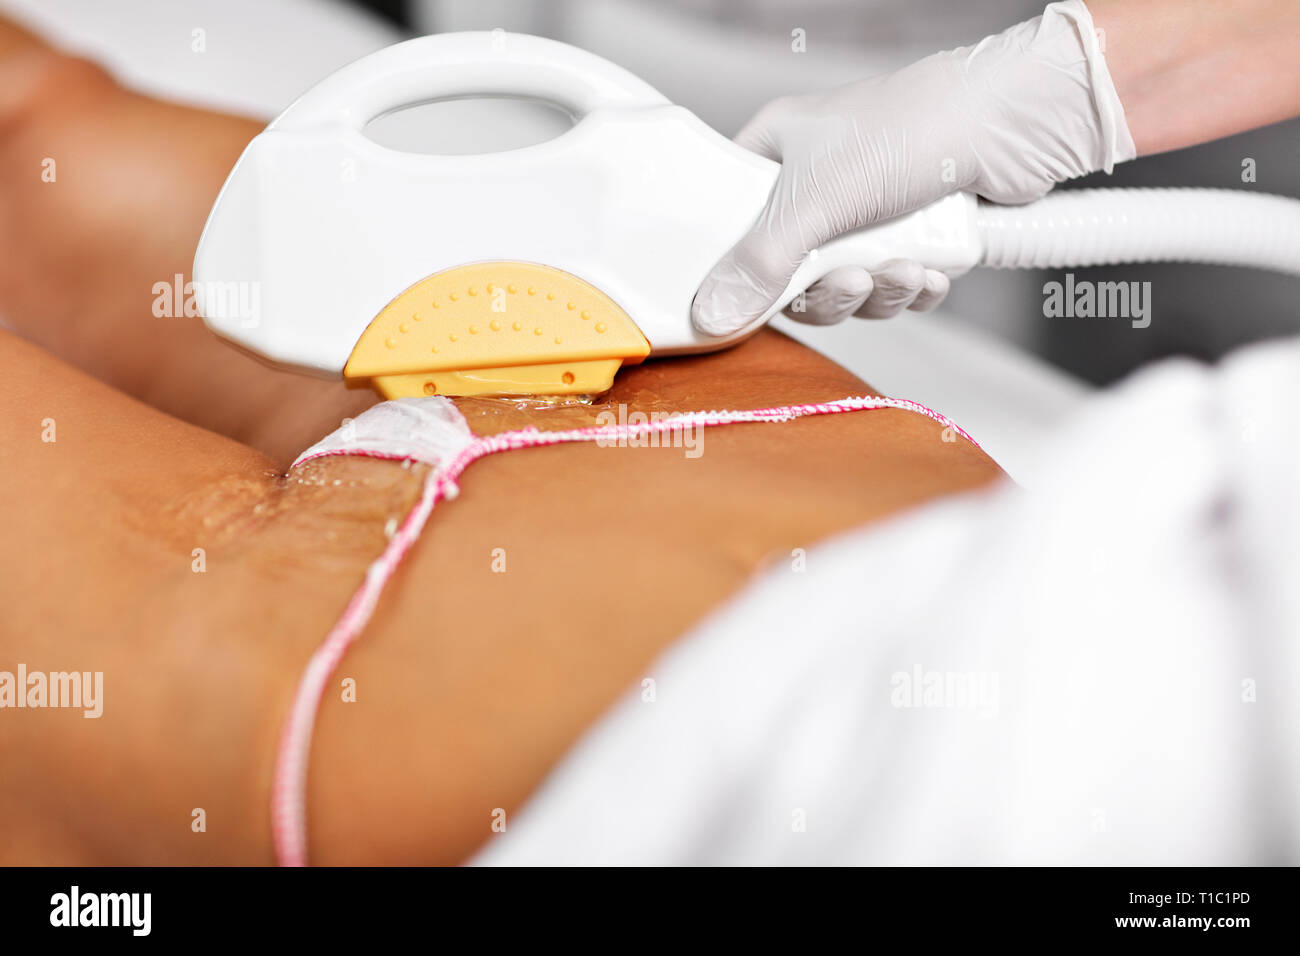 Picture Of Beautician Giving Epilation Laser Treatment To Woman On Bikini  Stock Photo - Alamy